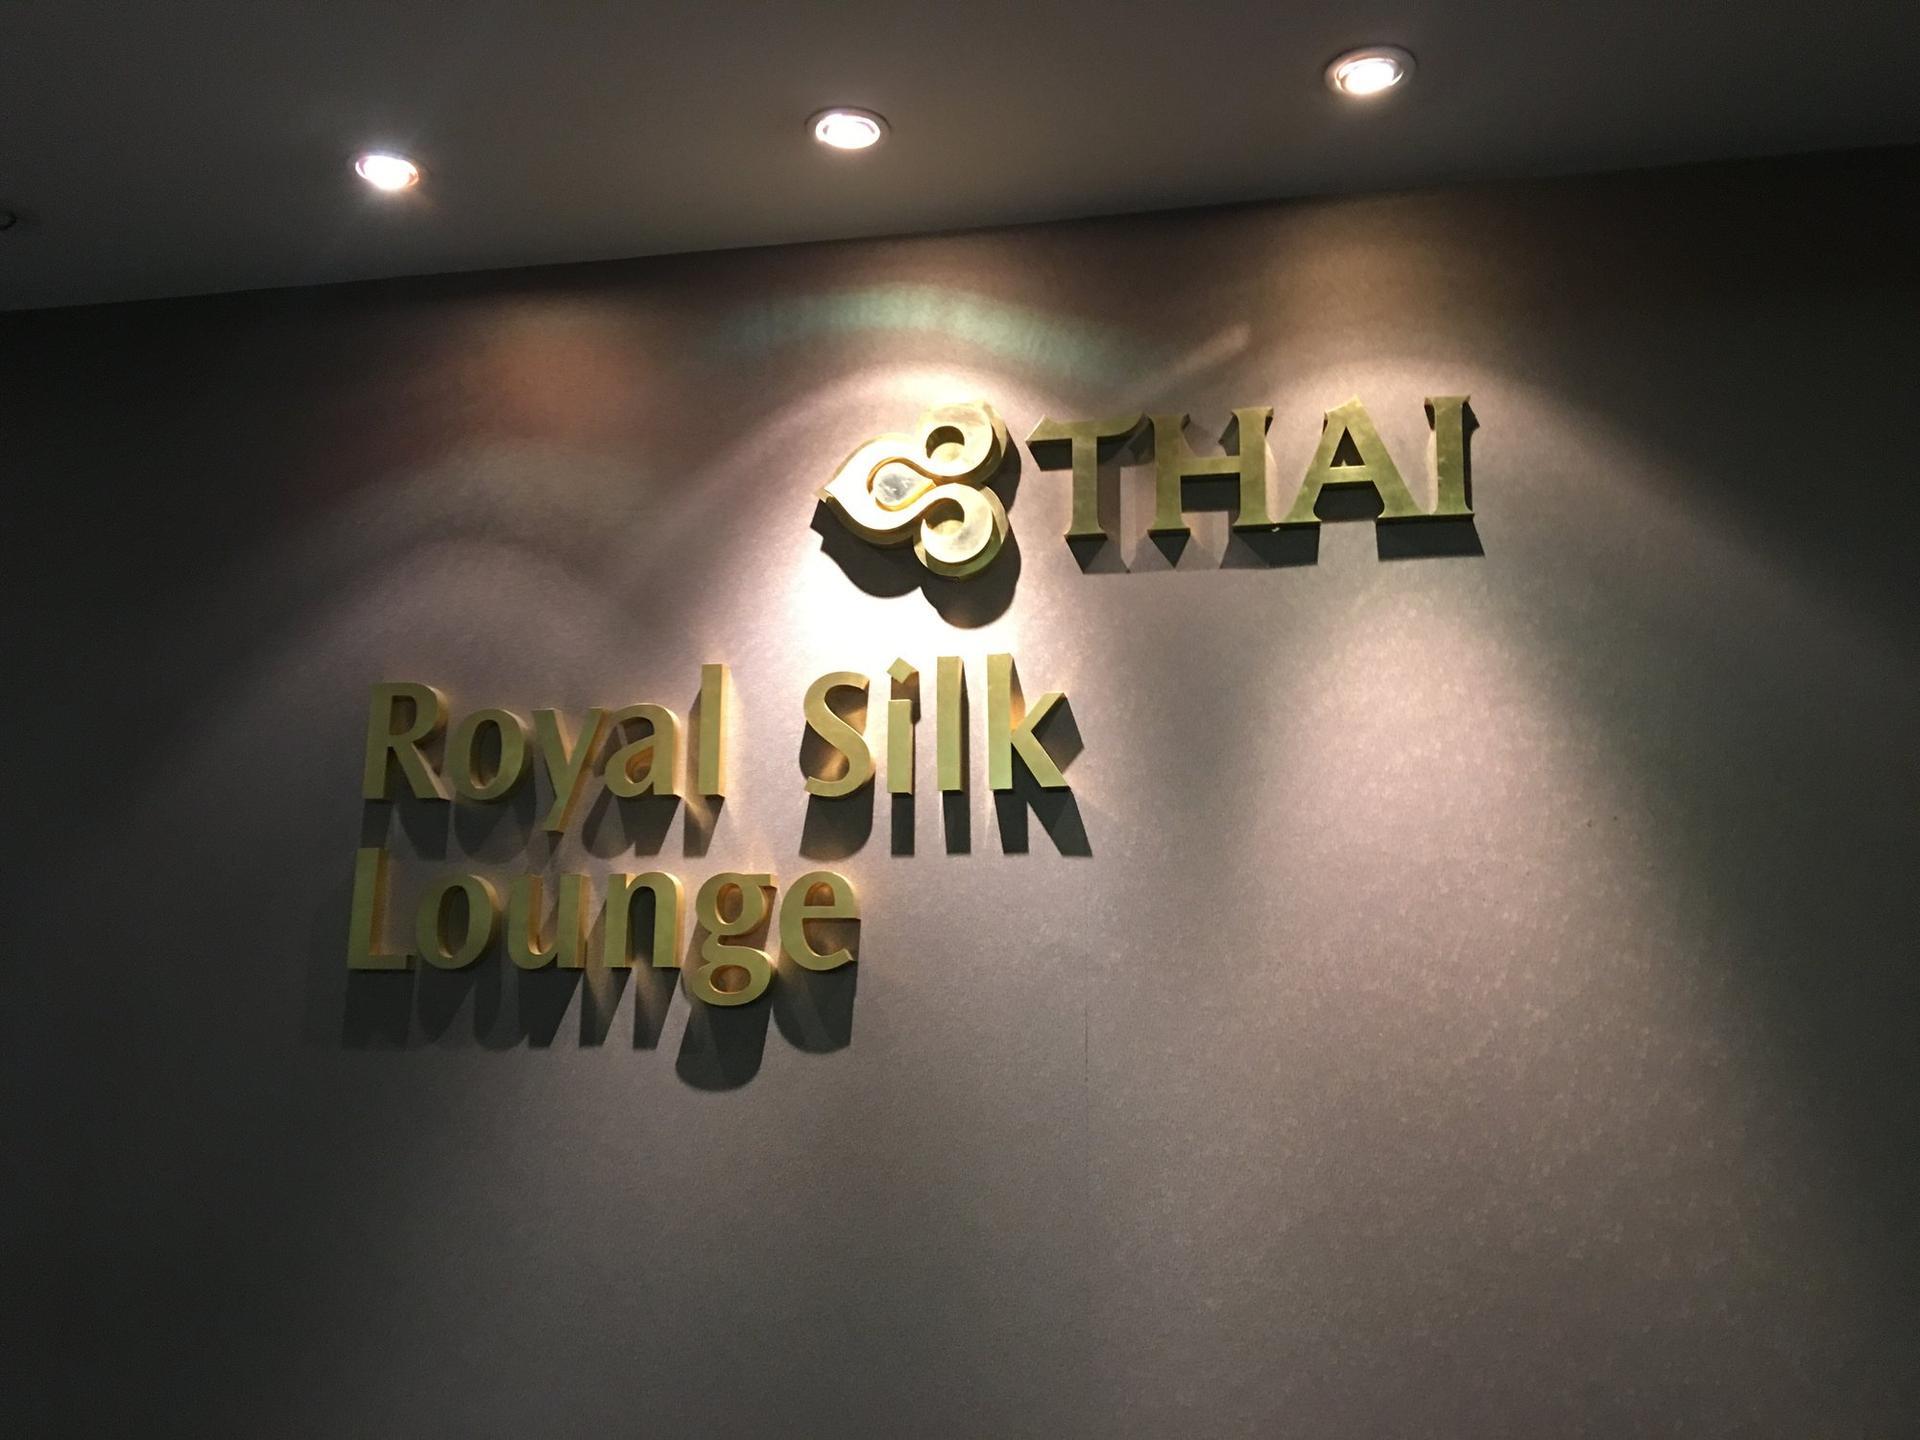 Thai Airways Royal Silk Lounge (Domestic) image 4 of 25